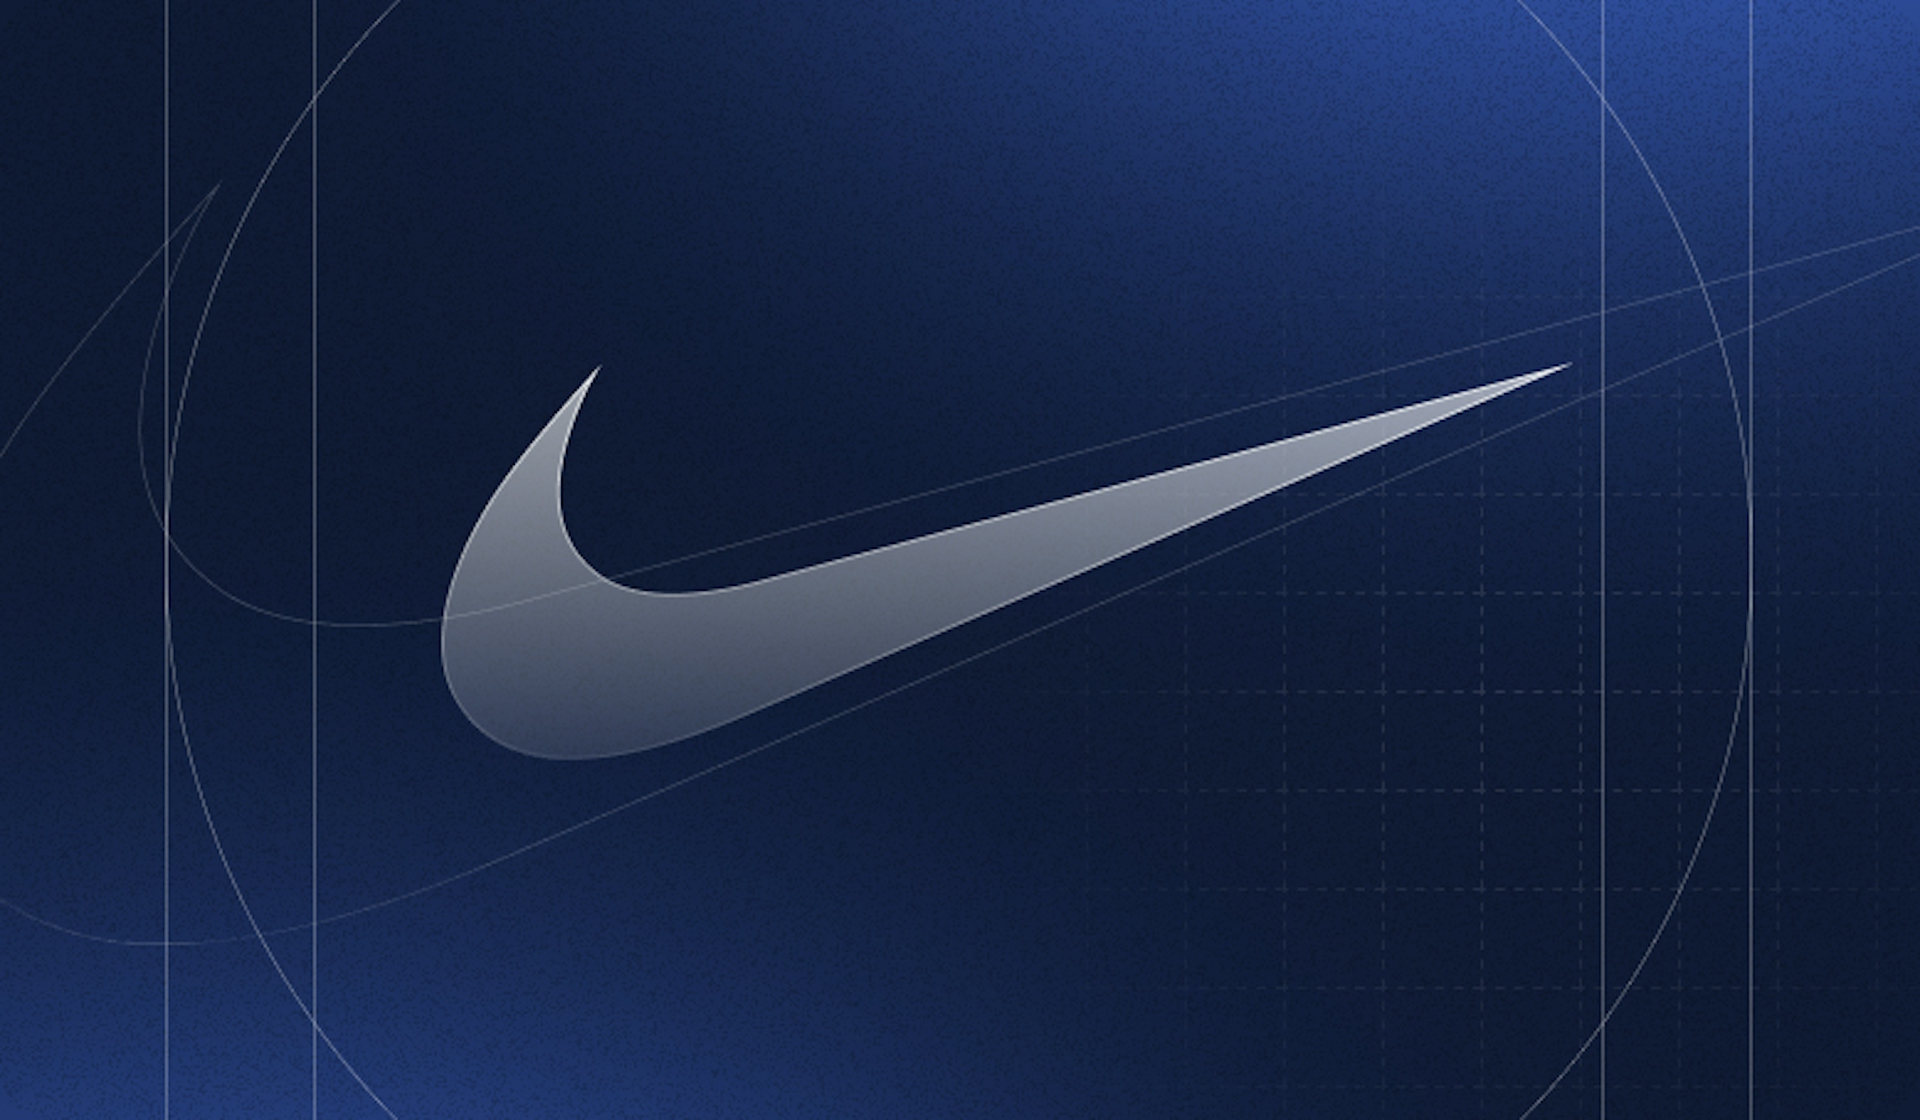 The Nike logo.